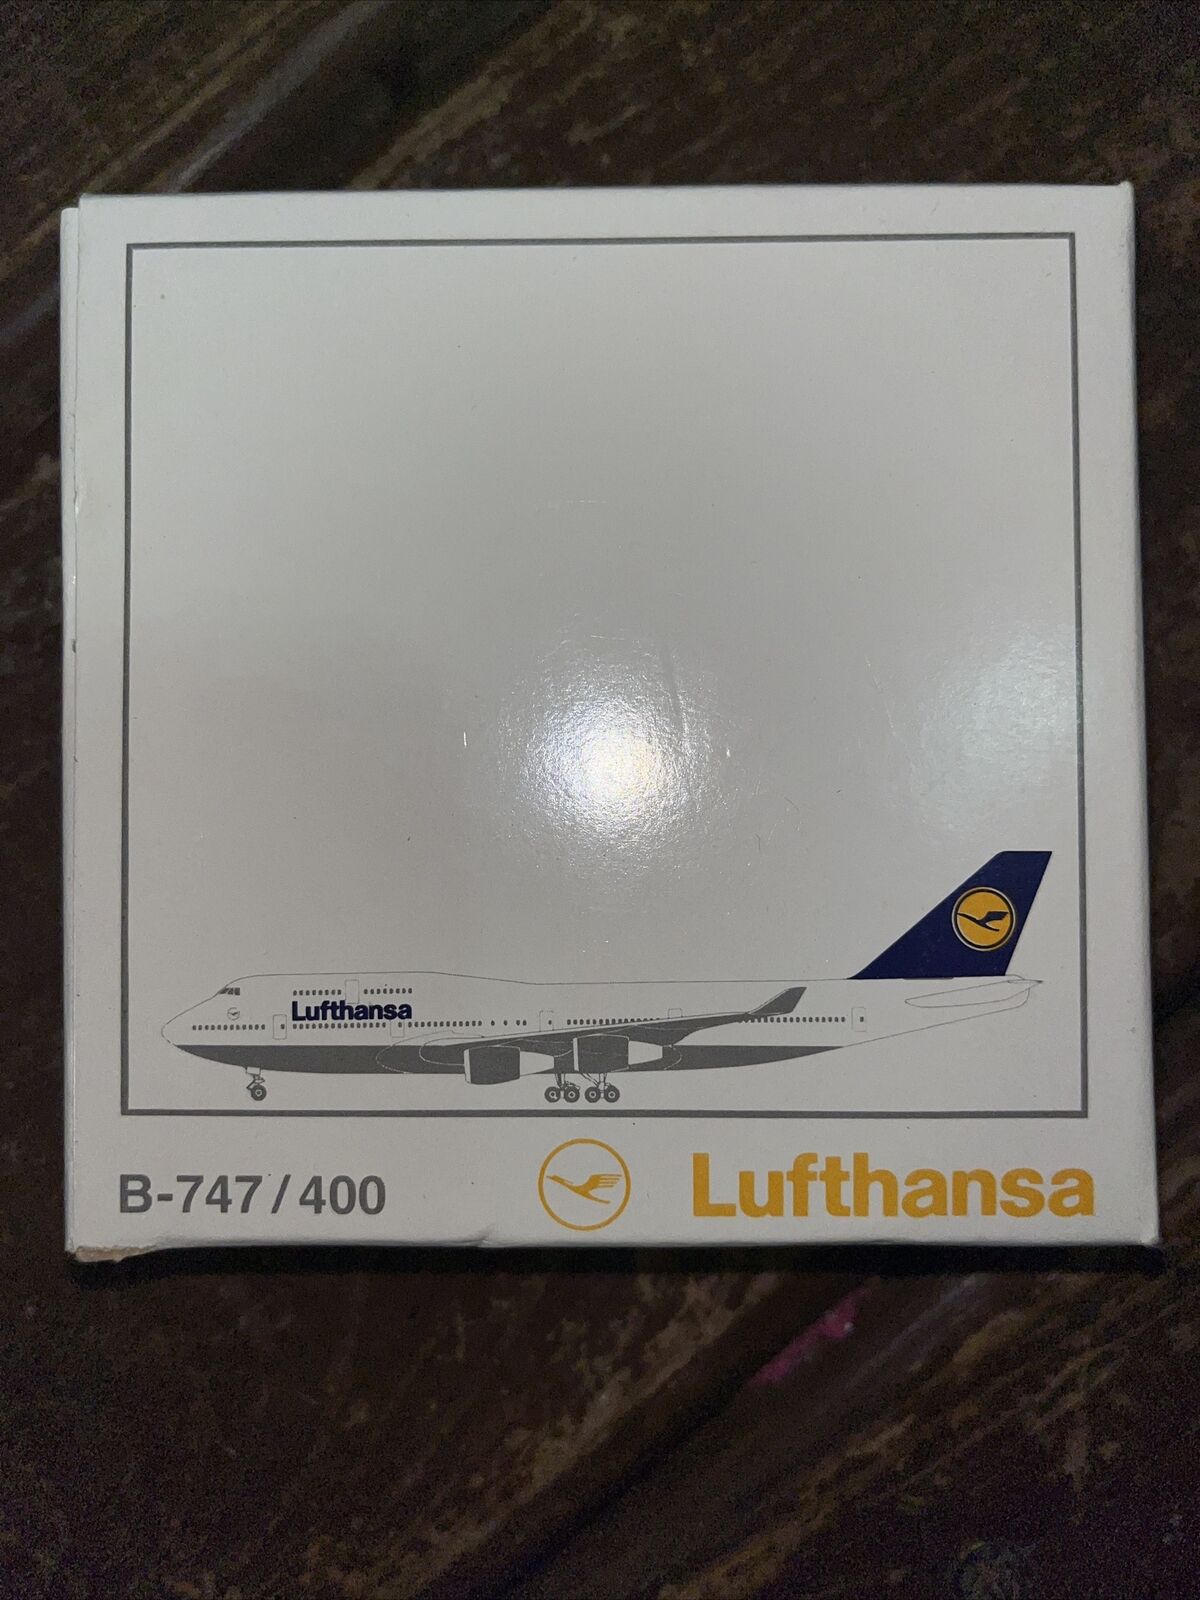 Lufthansa B-747/400 Model By Shabak